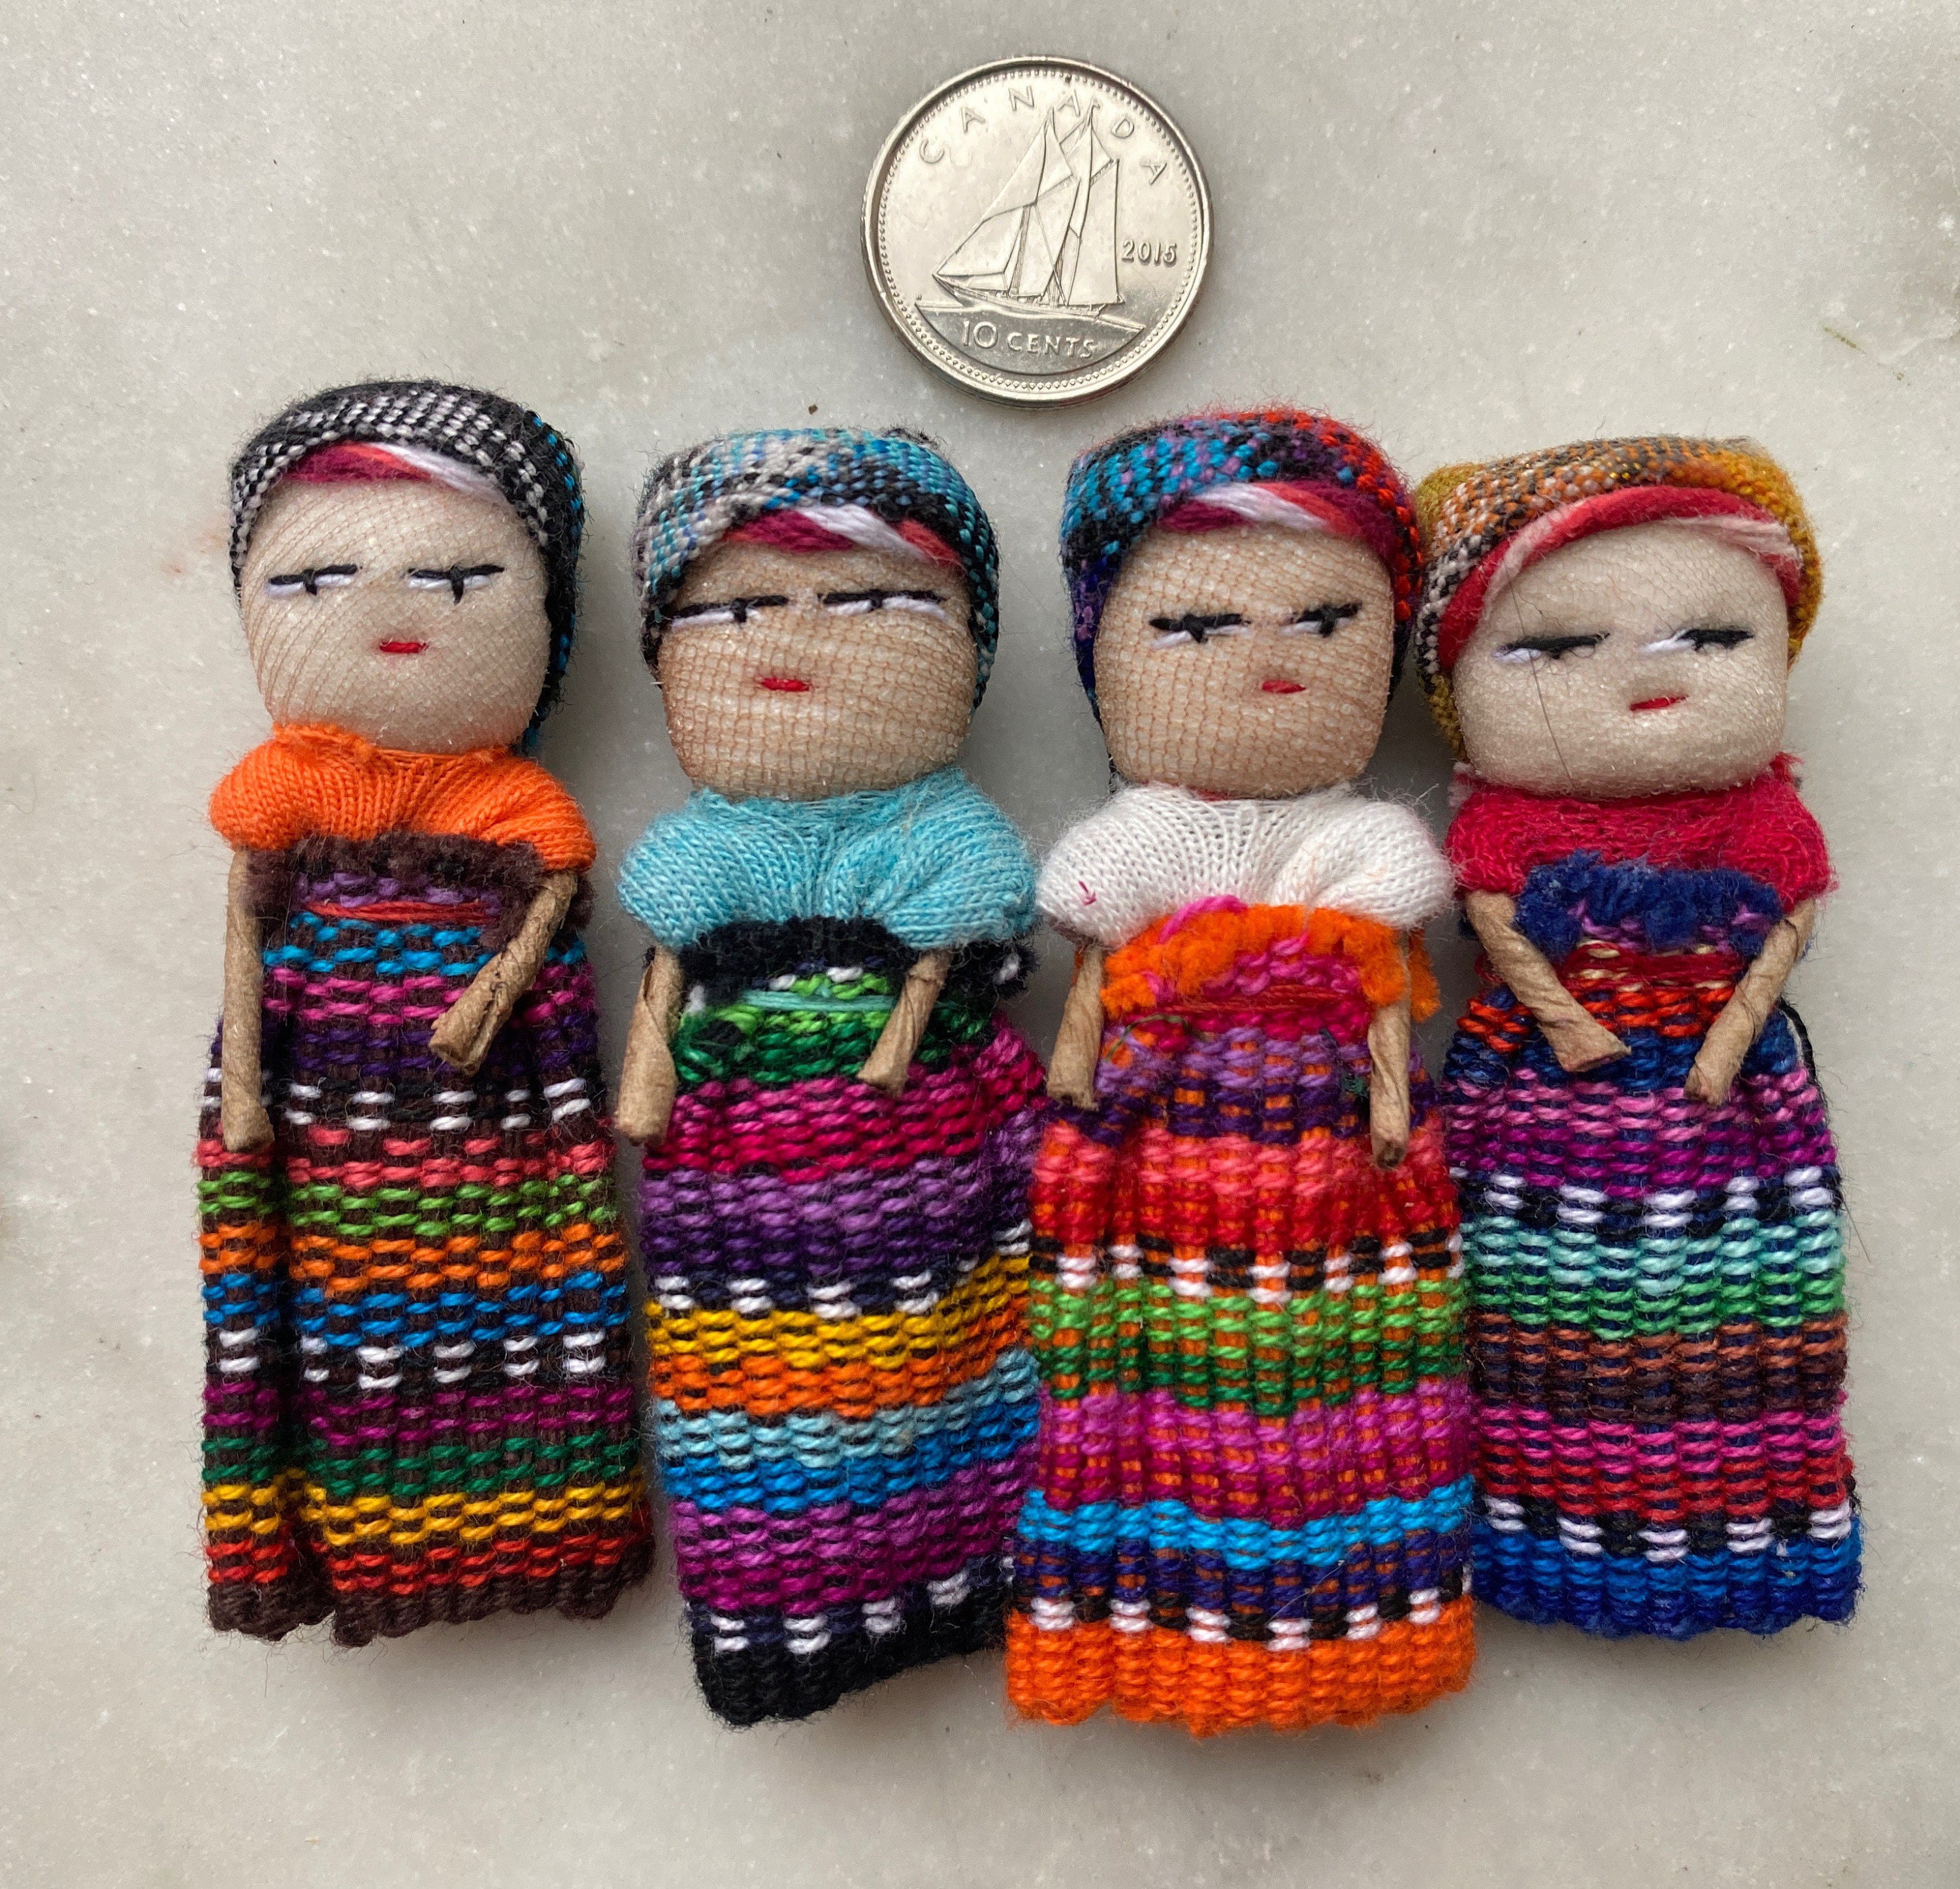 Guatemalan Worry Dolls Tradition - Spanish Academy Antiguena